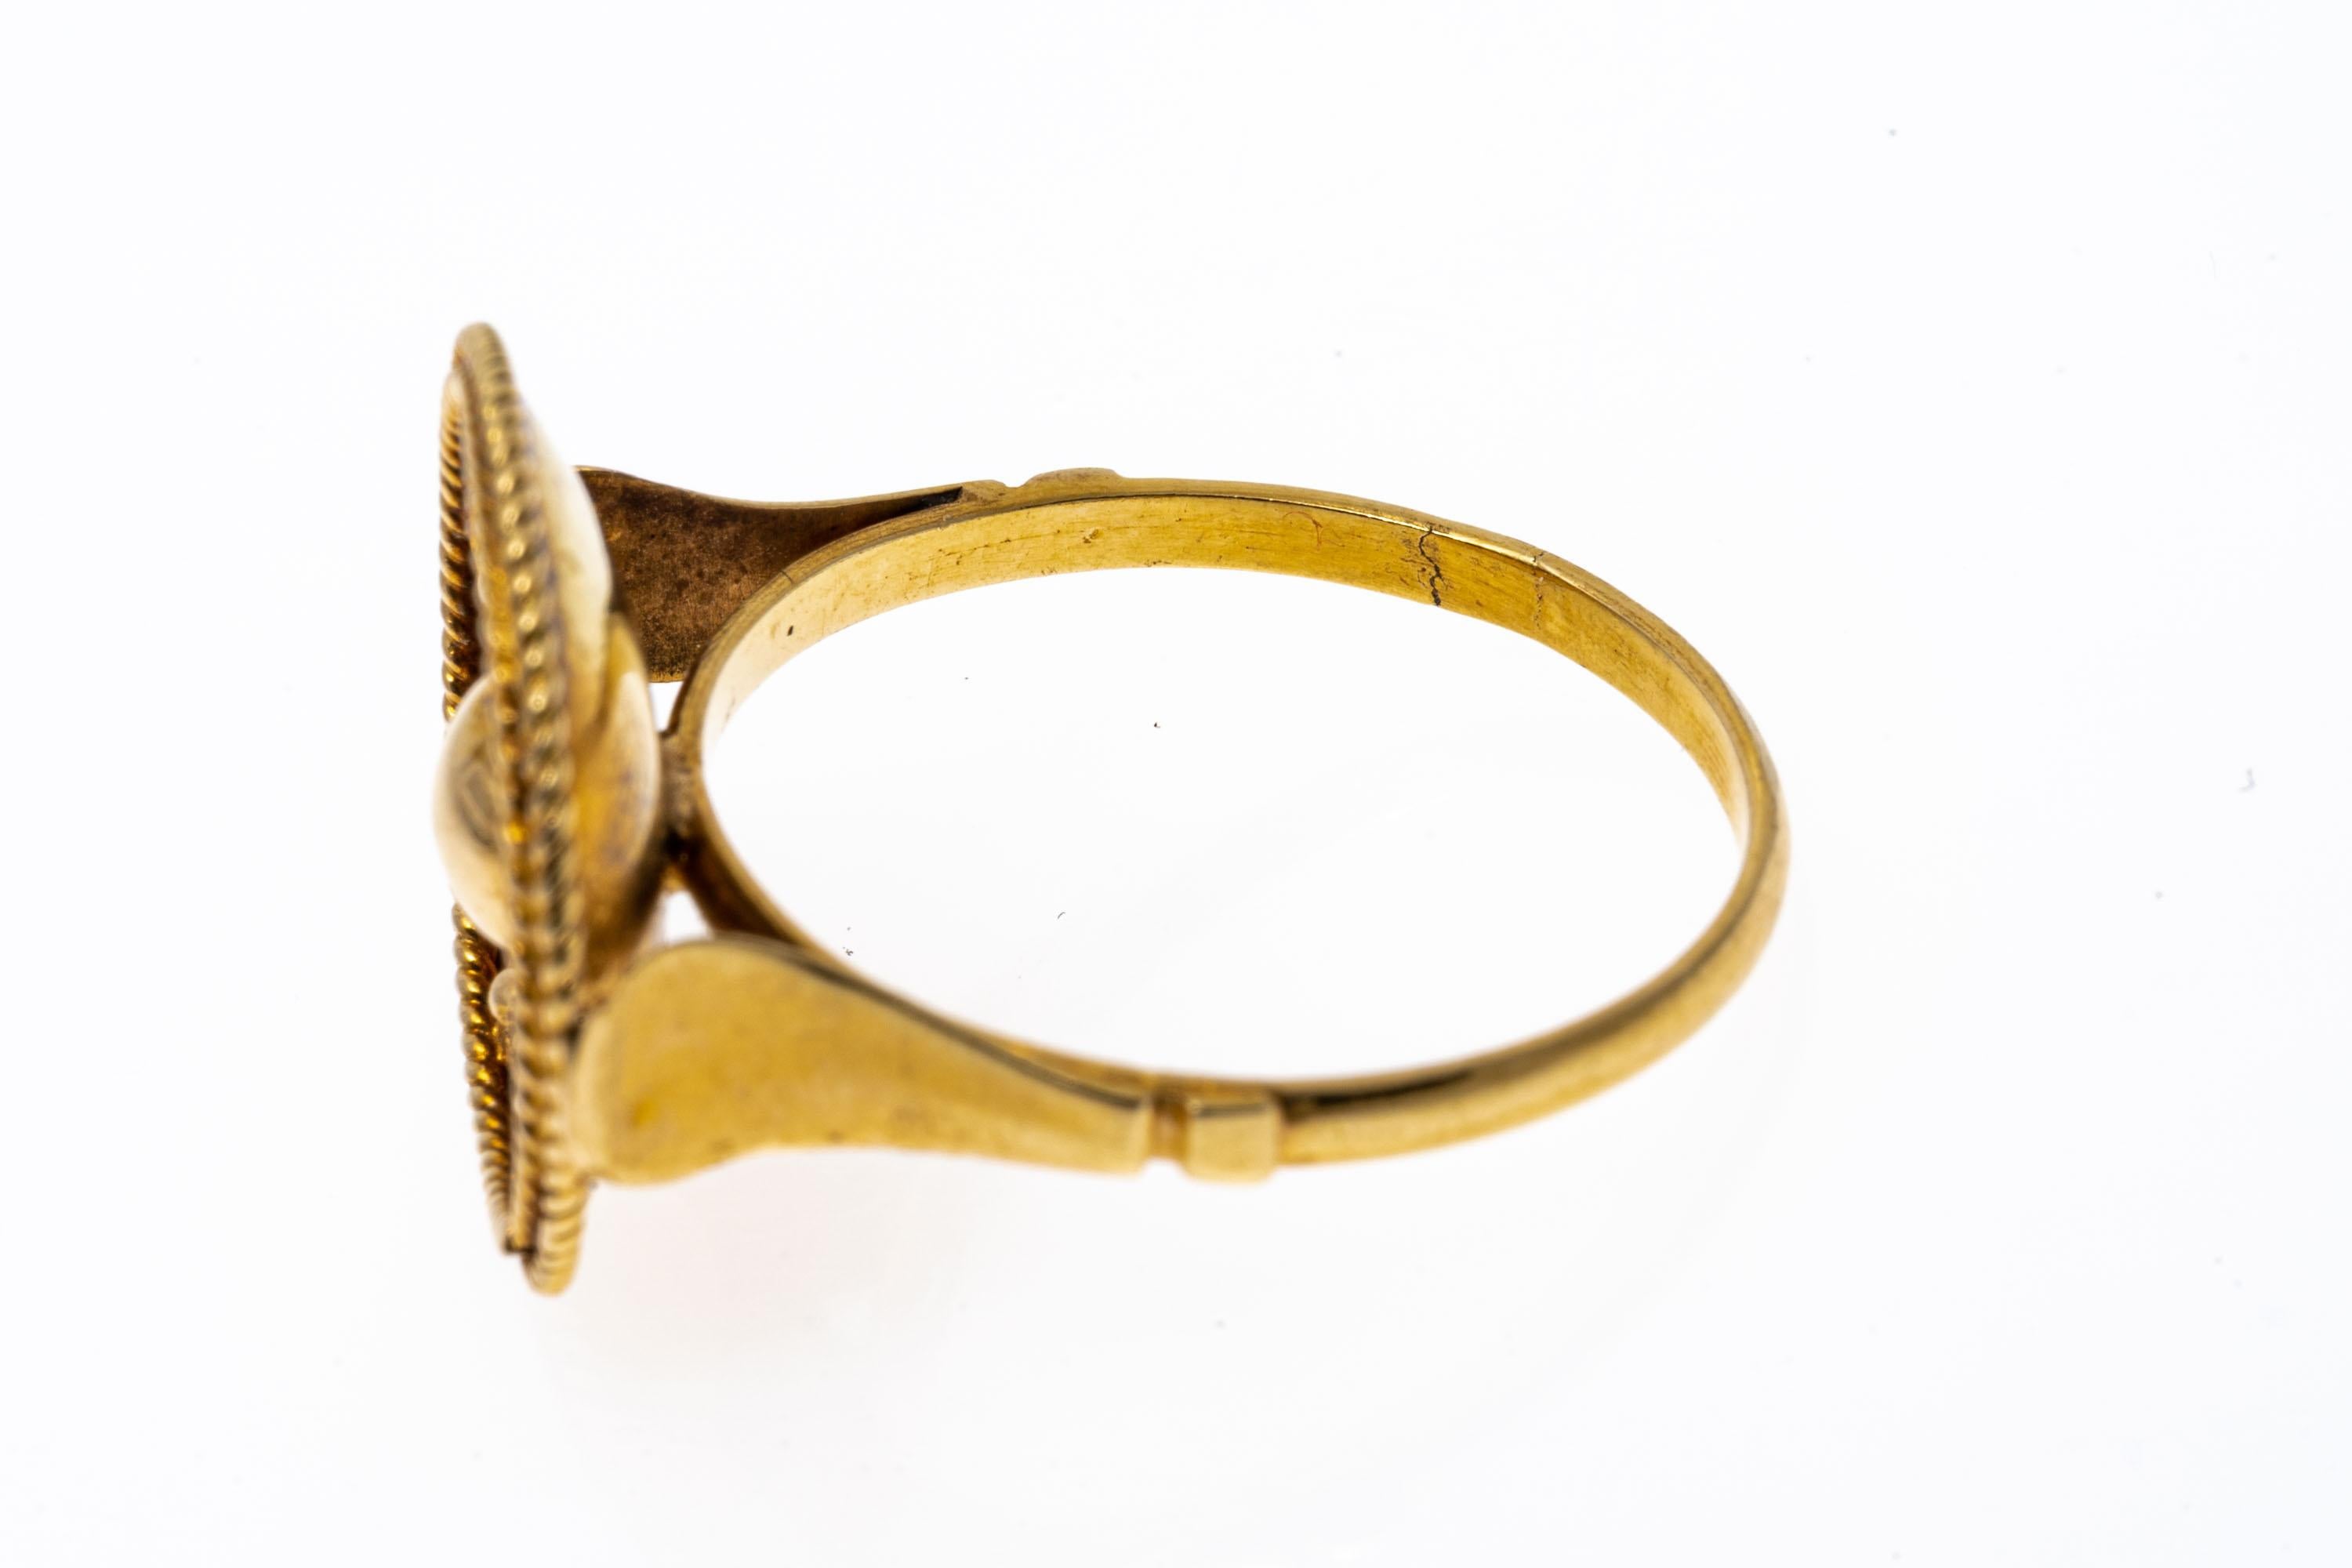 jodha ring design in gold